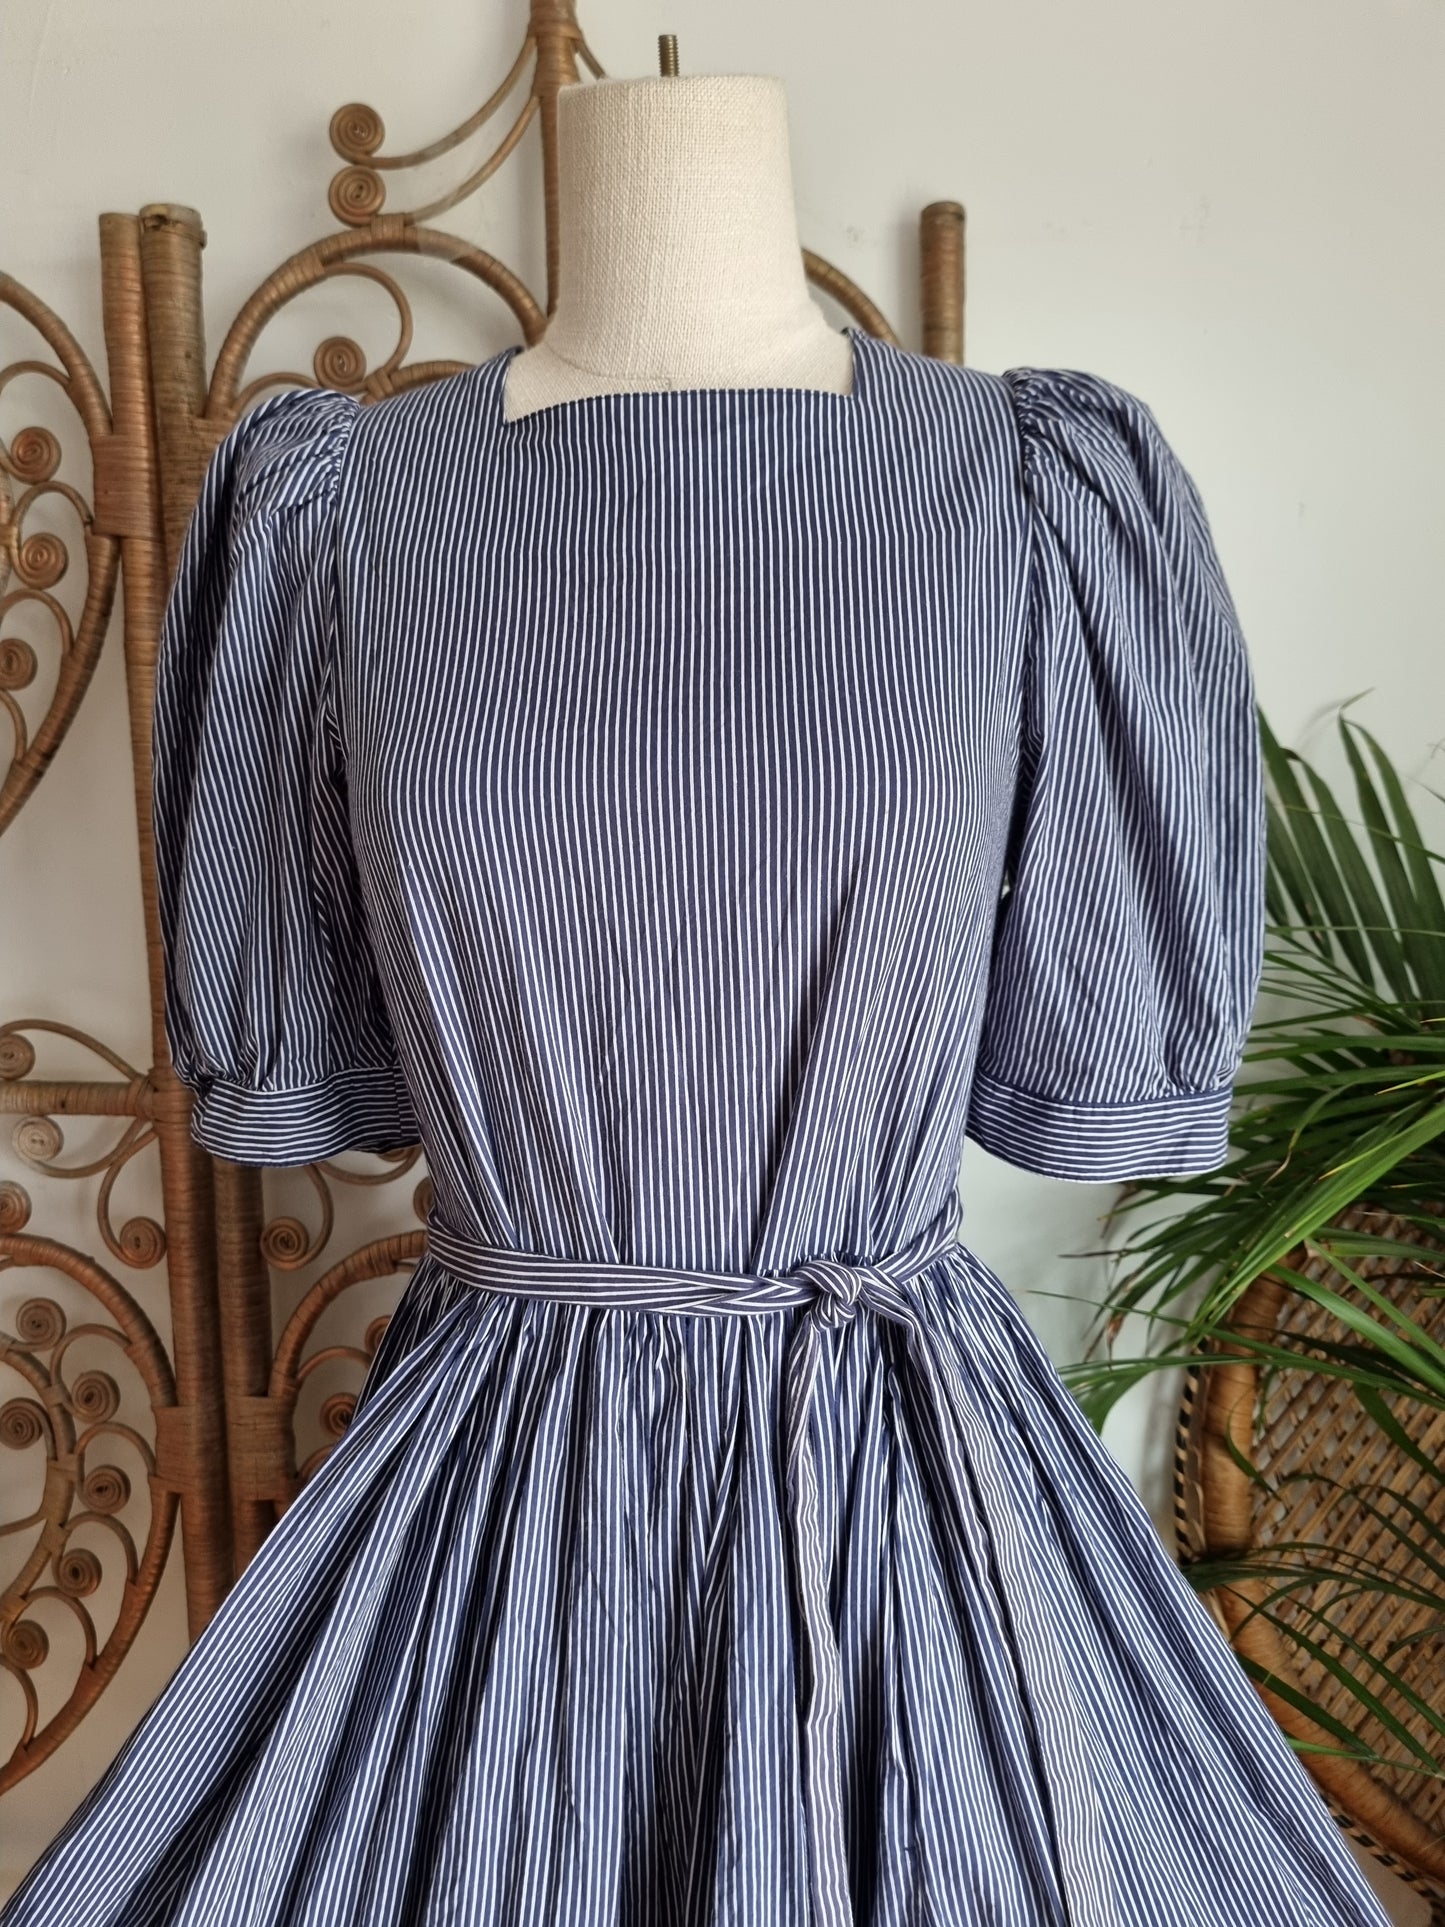 Vintage Laura Ashley dress